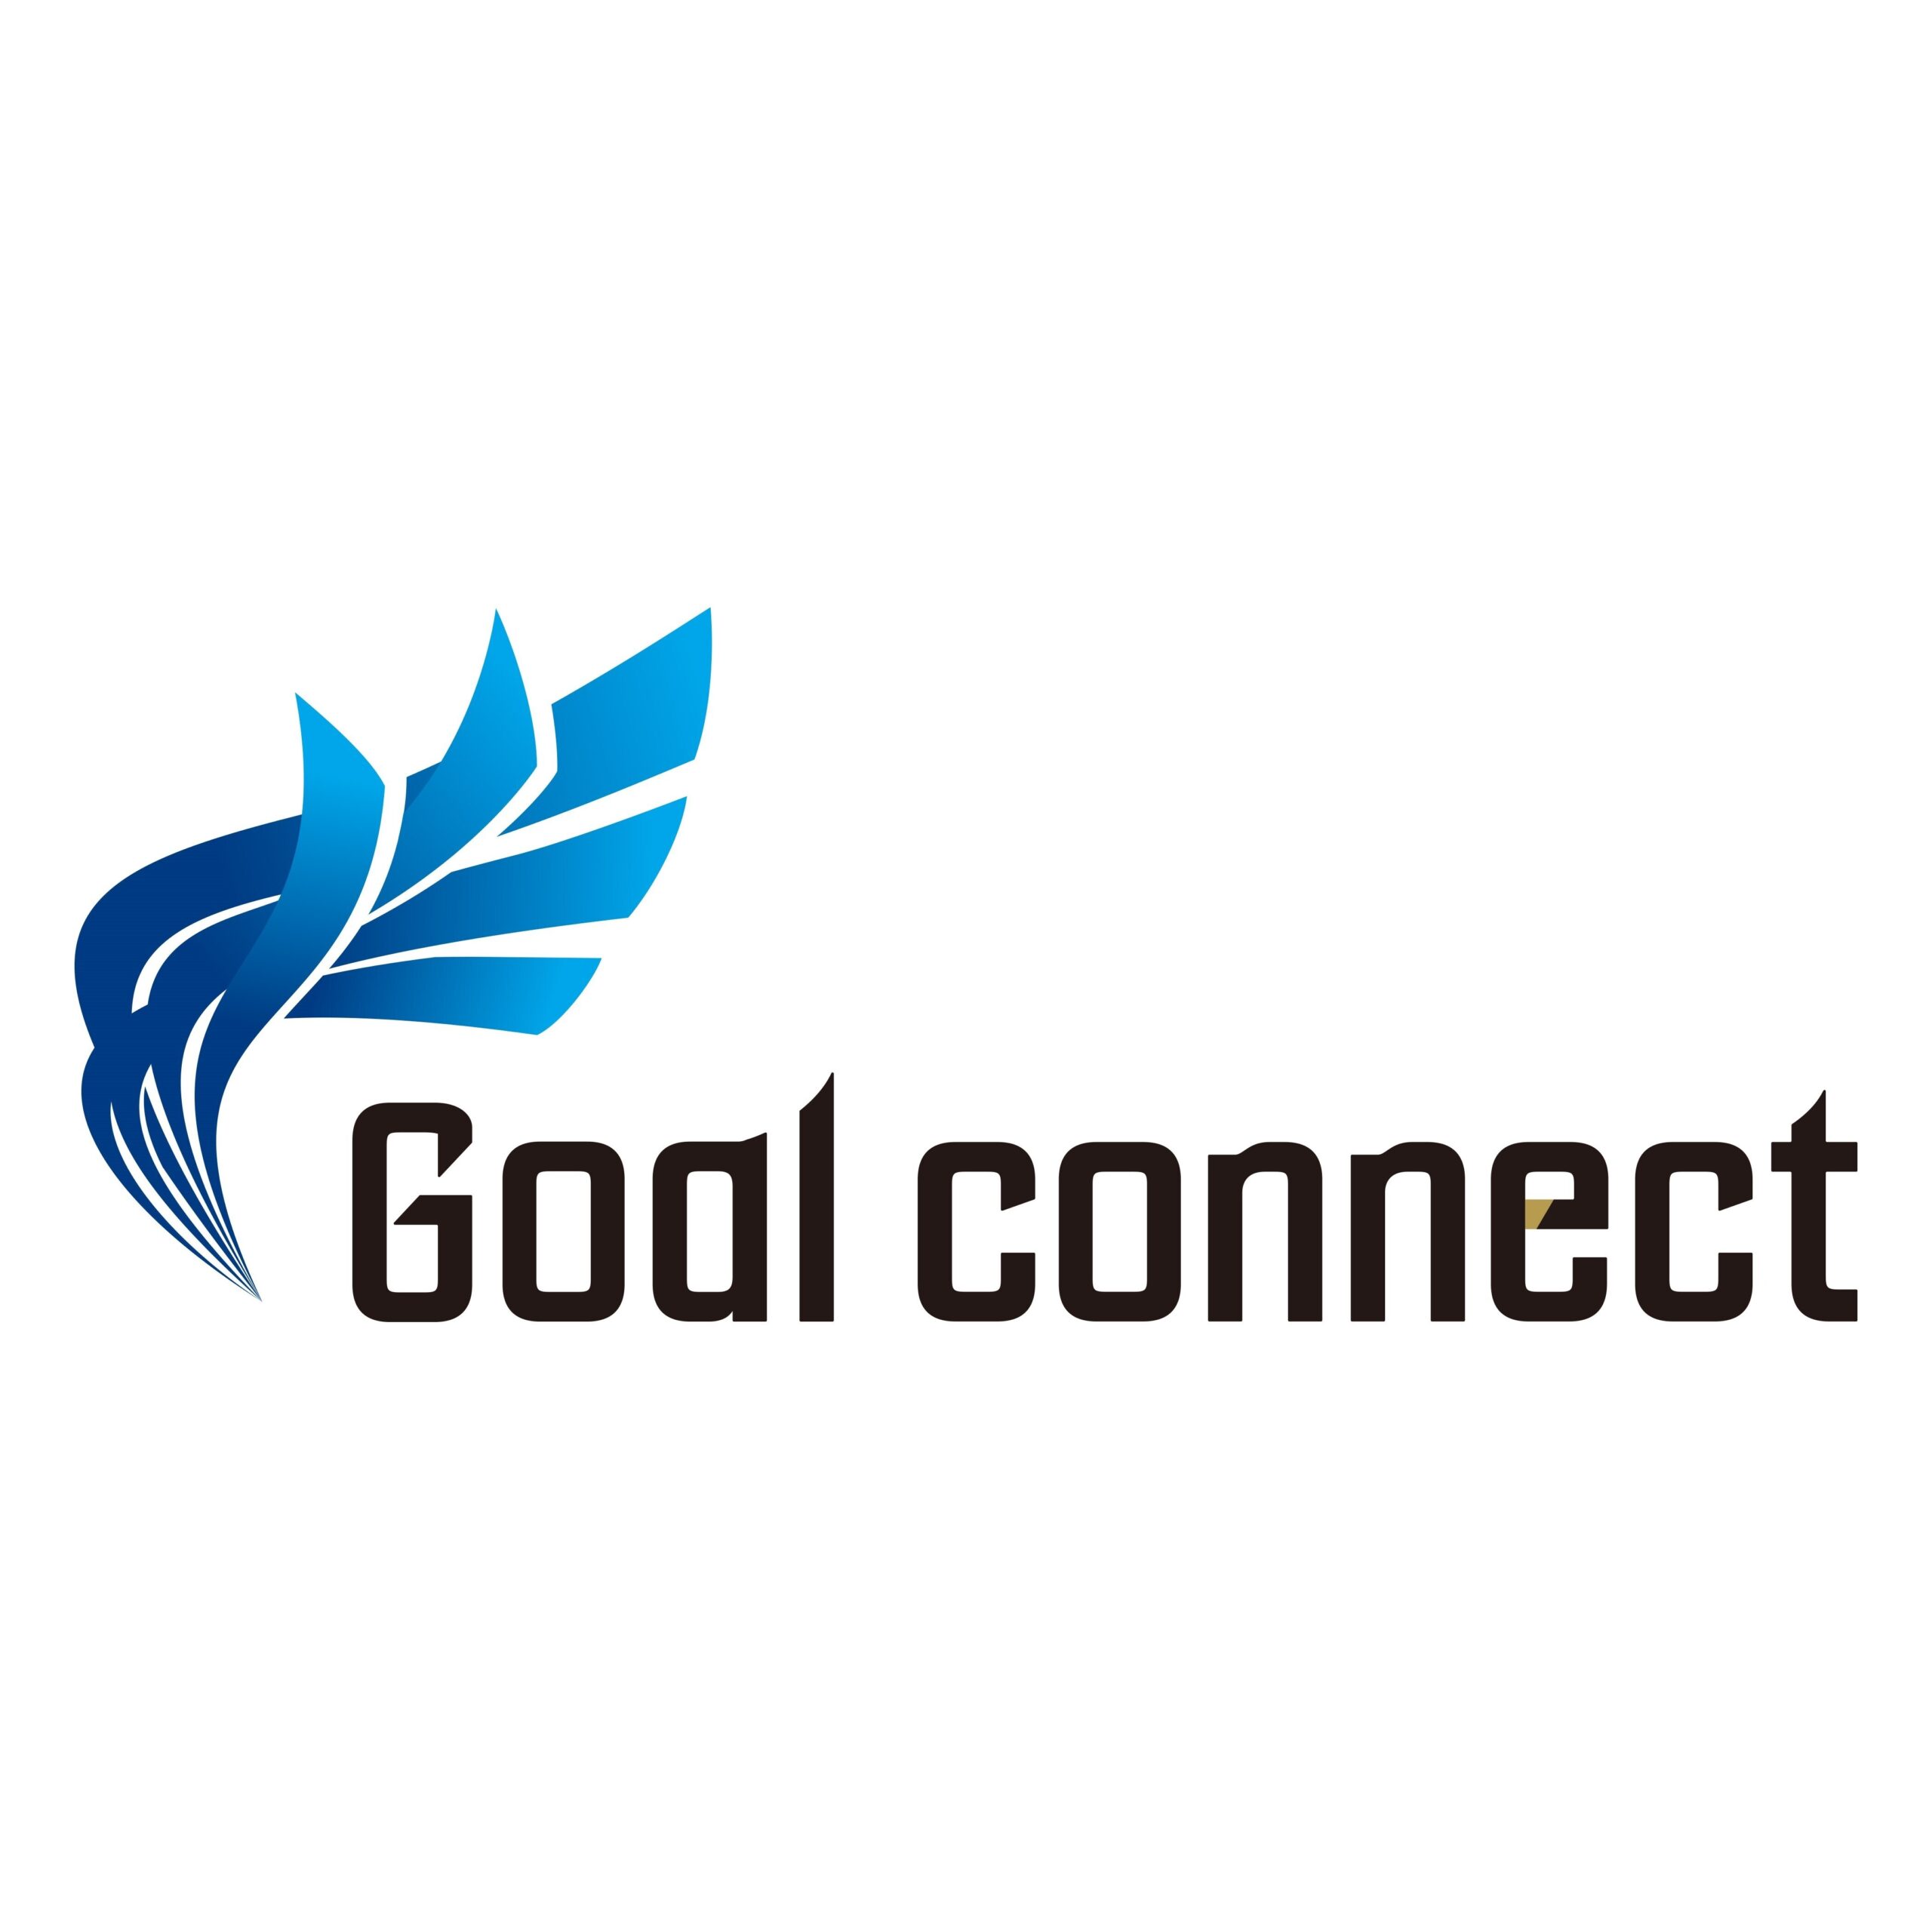 Goal connect株式会社